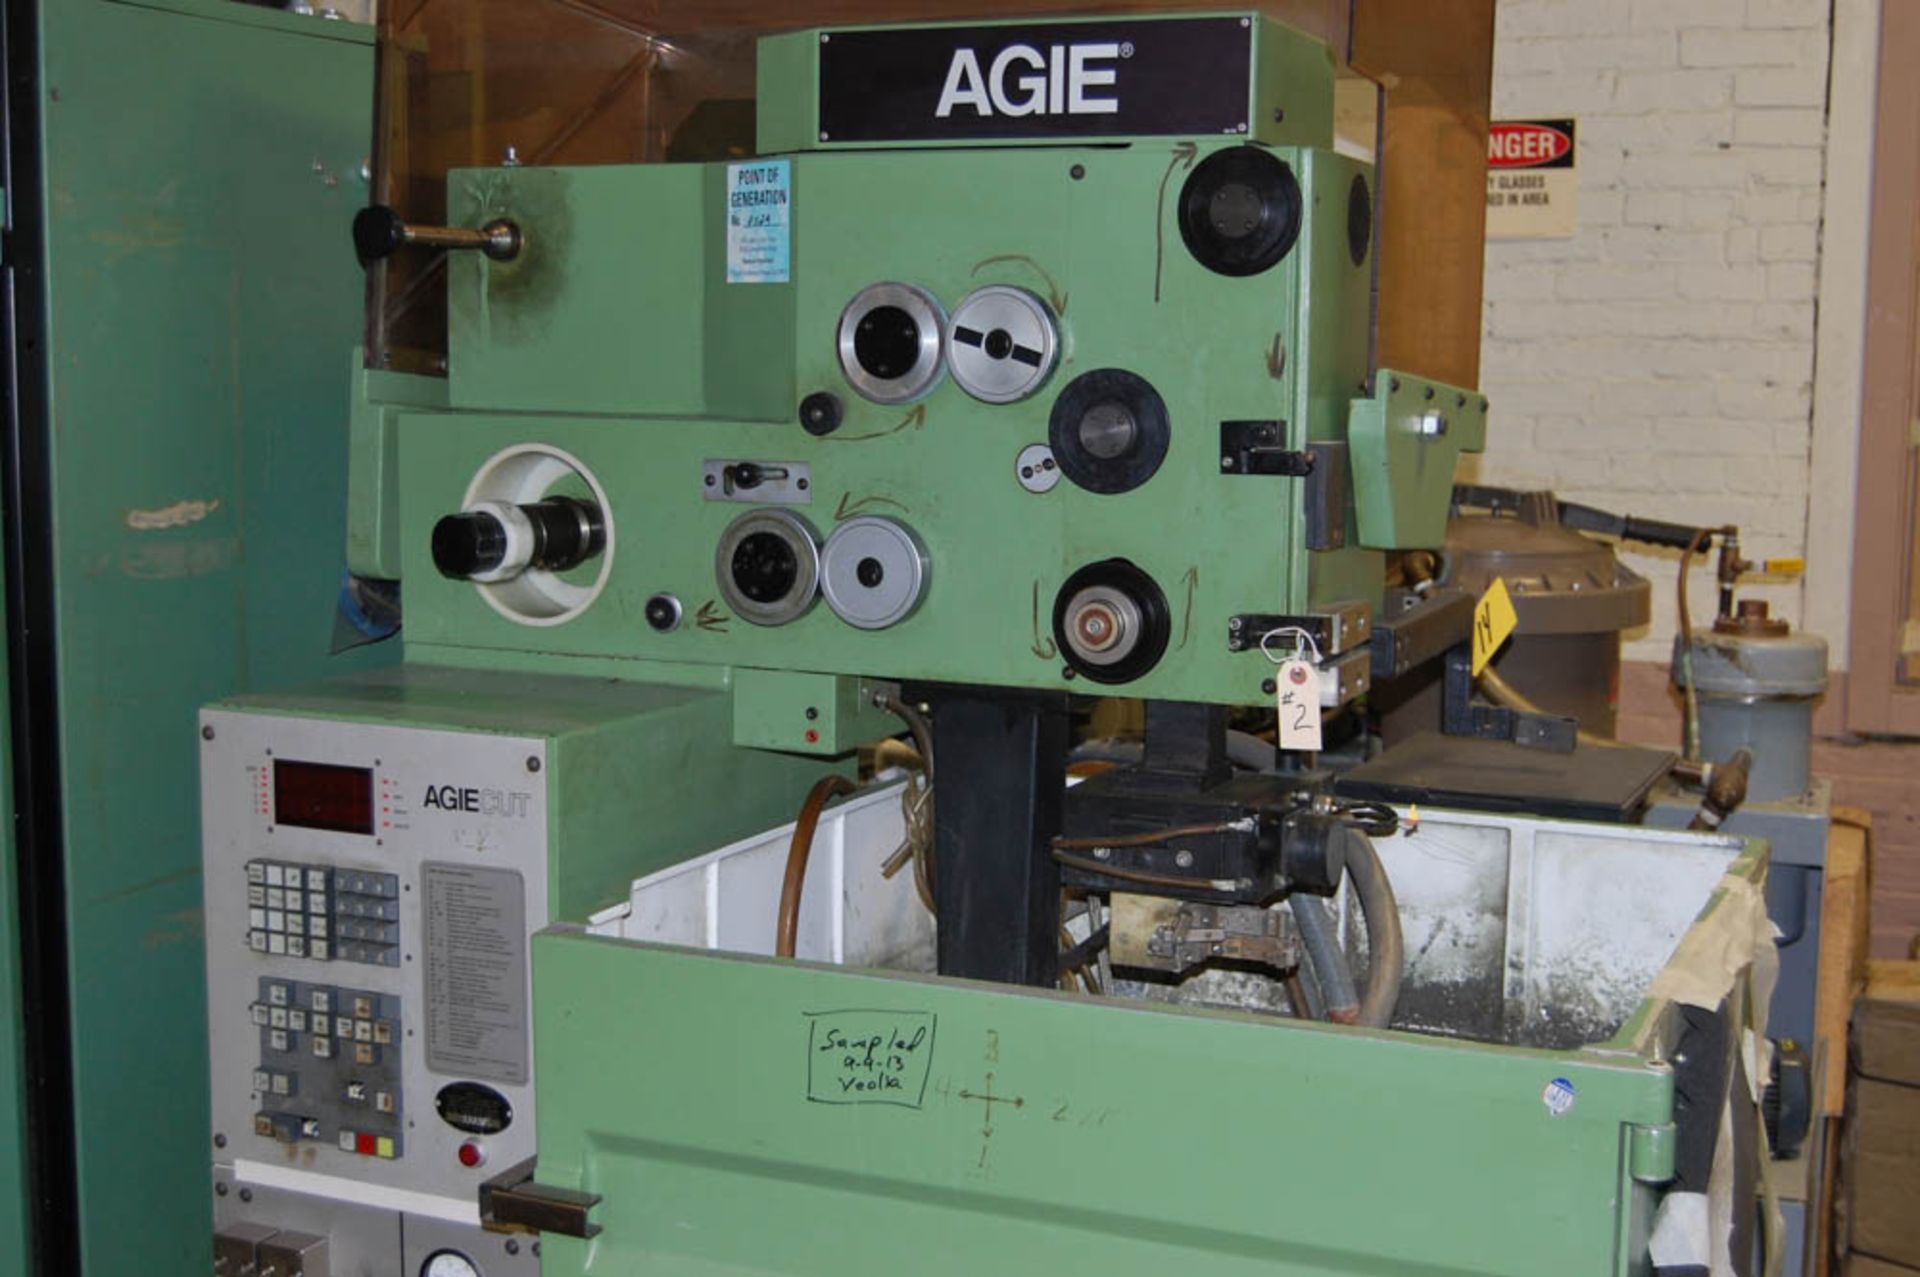 AGIE MDL. #CNC100/2 WIRE EDM MACHINE, 13.5'' X 22'' T-SLOTTED TABLE, AGIE MERIC CNC 100D-ACC-( - Image 3 of 3